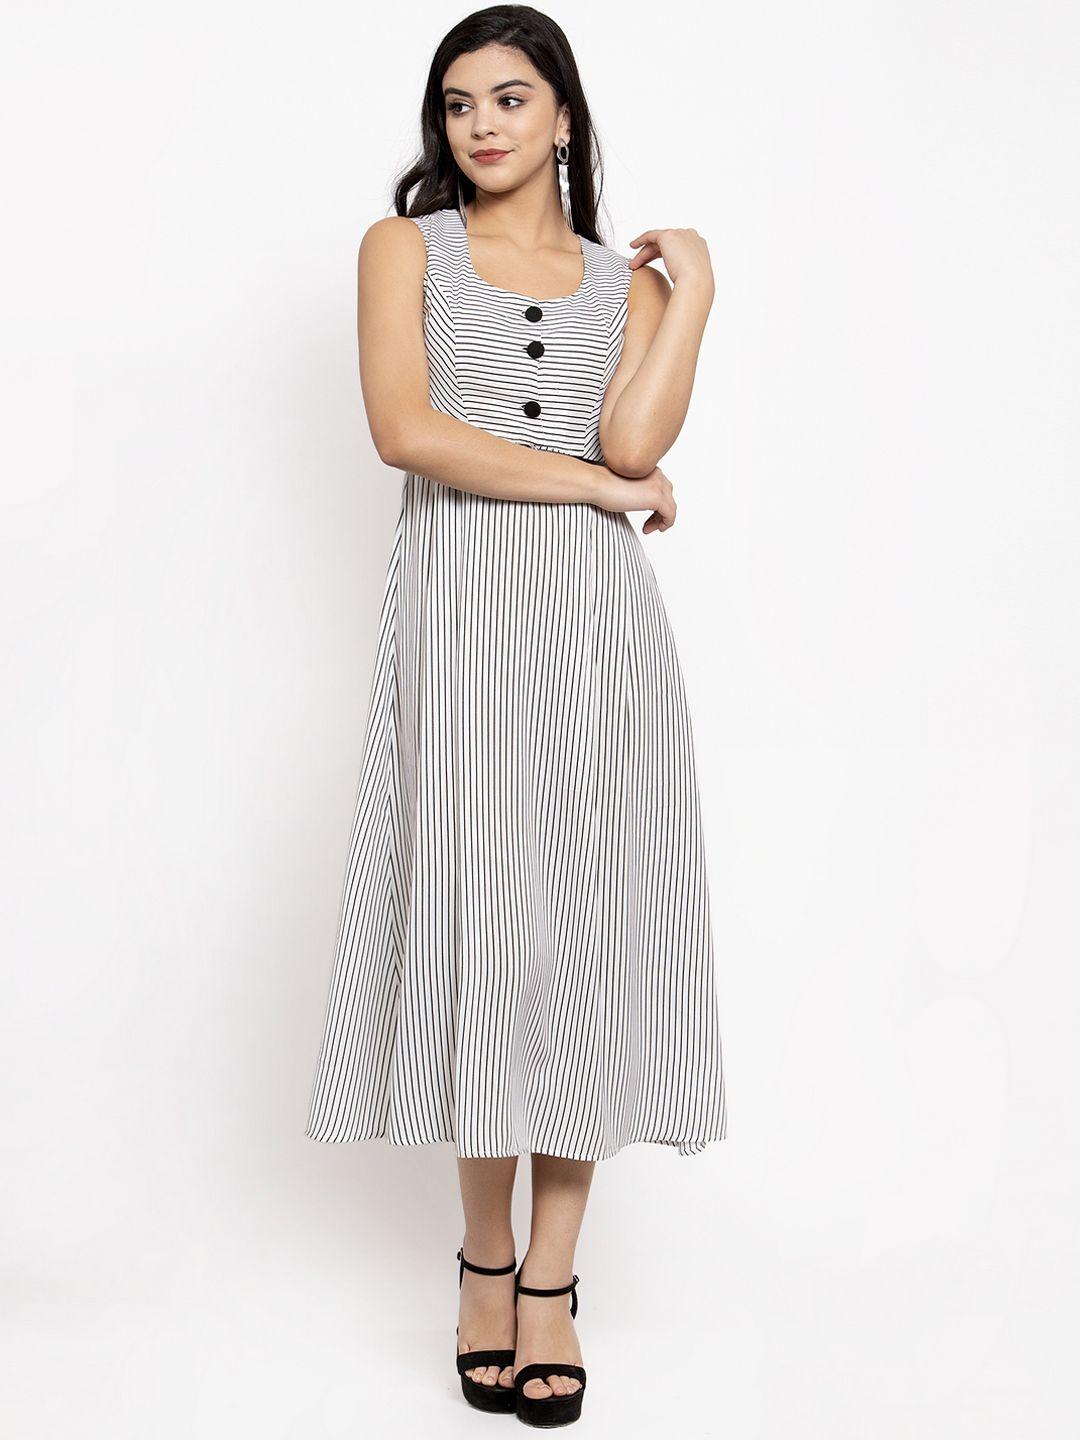 kassually women black & white striped a-line dress